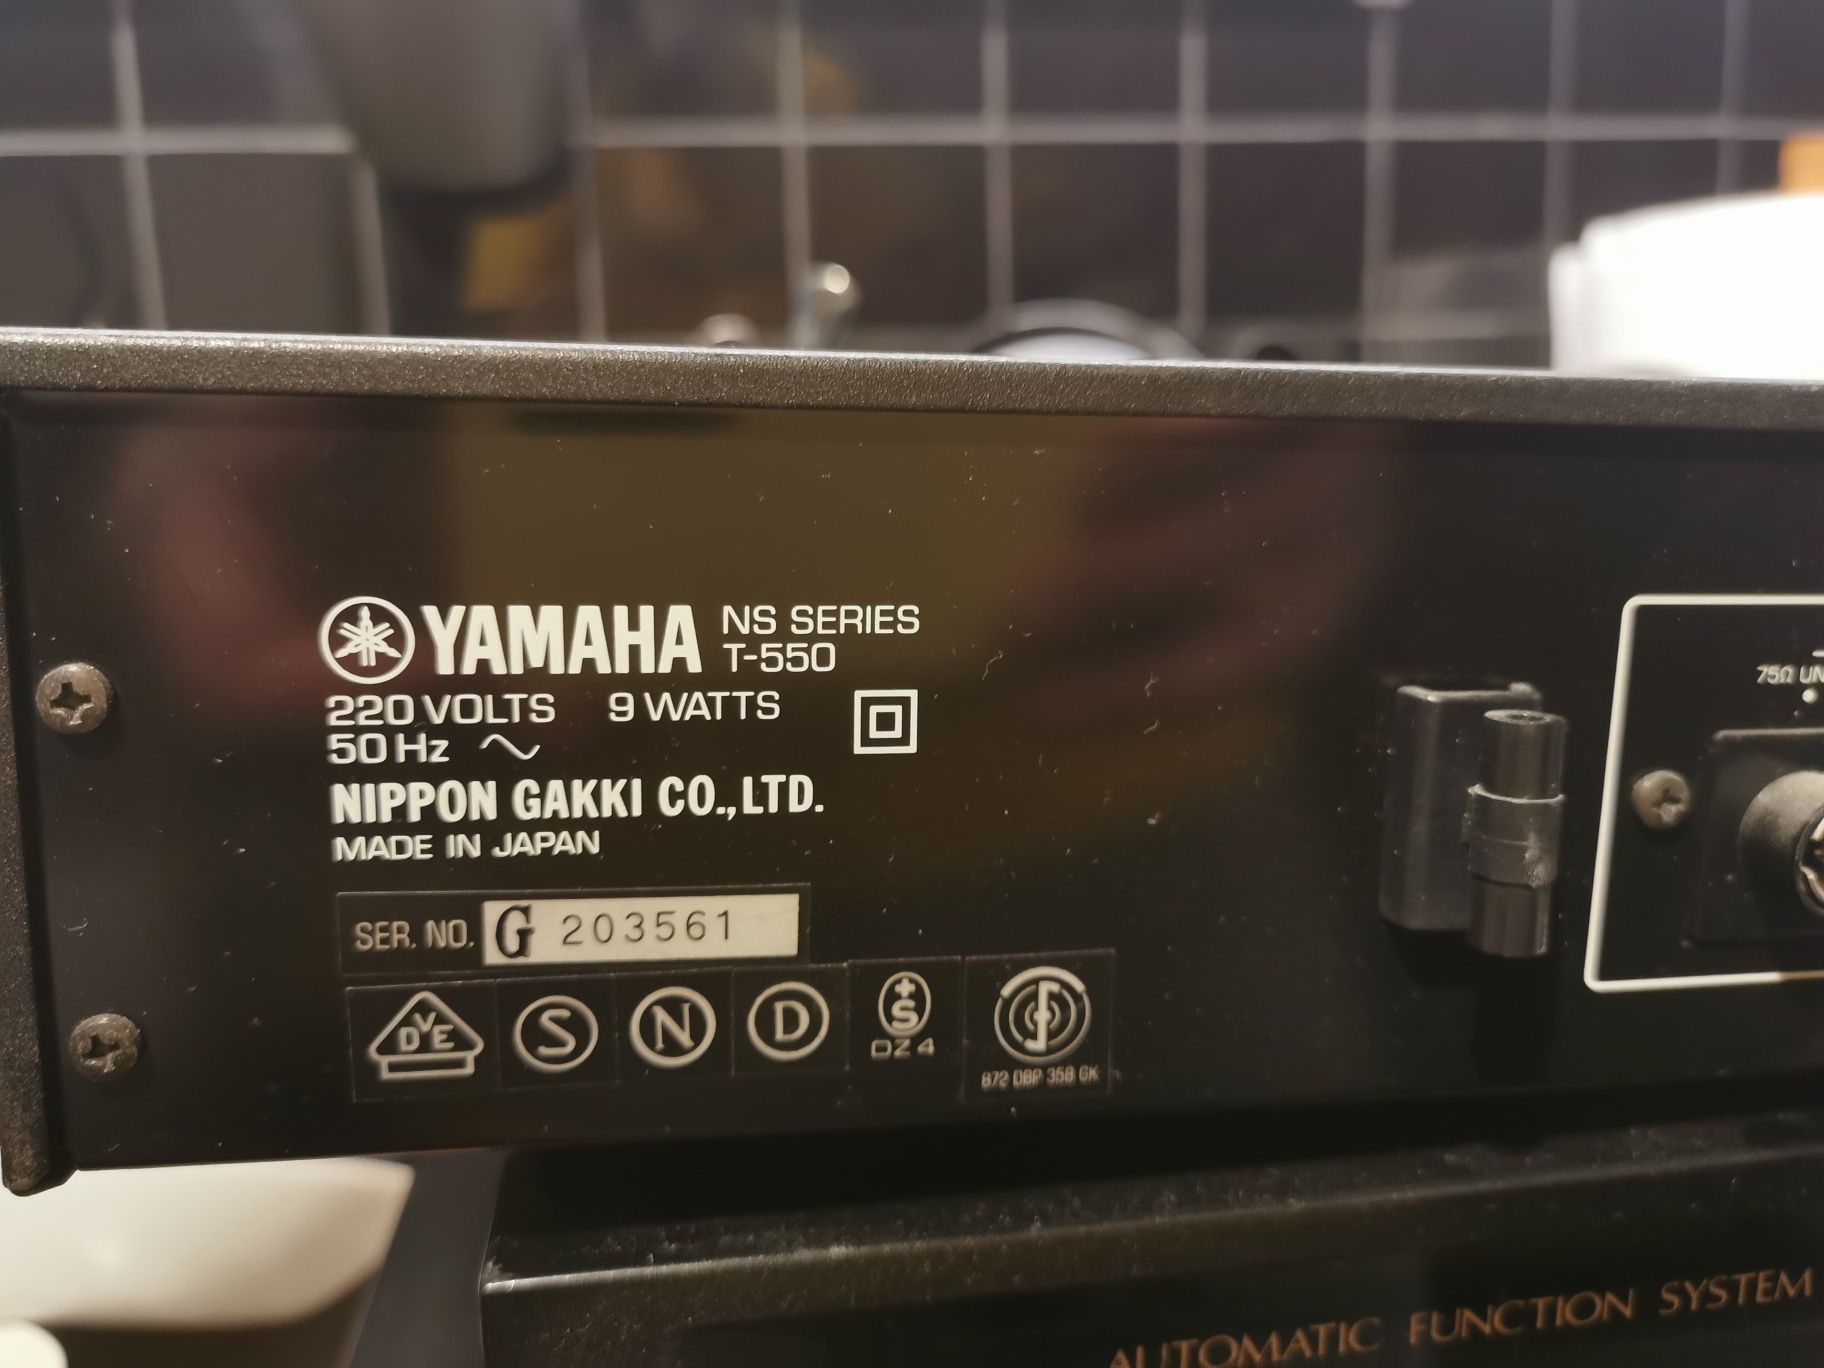 Yamaha t-550 tuner radiowy ns series lata 70